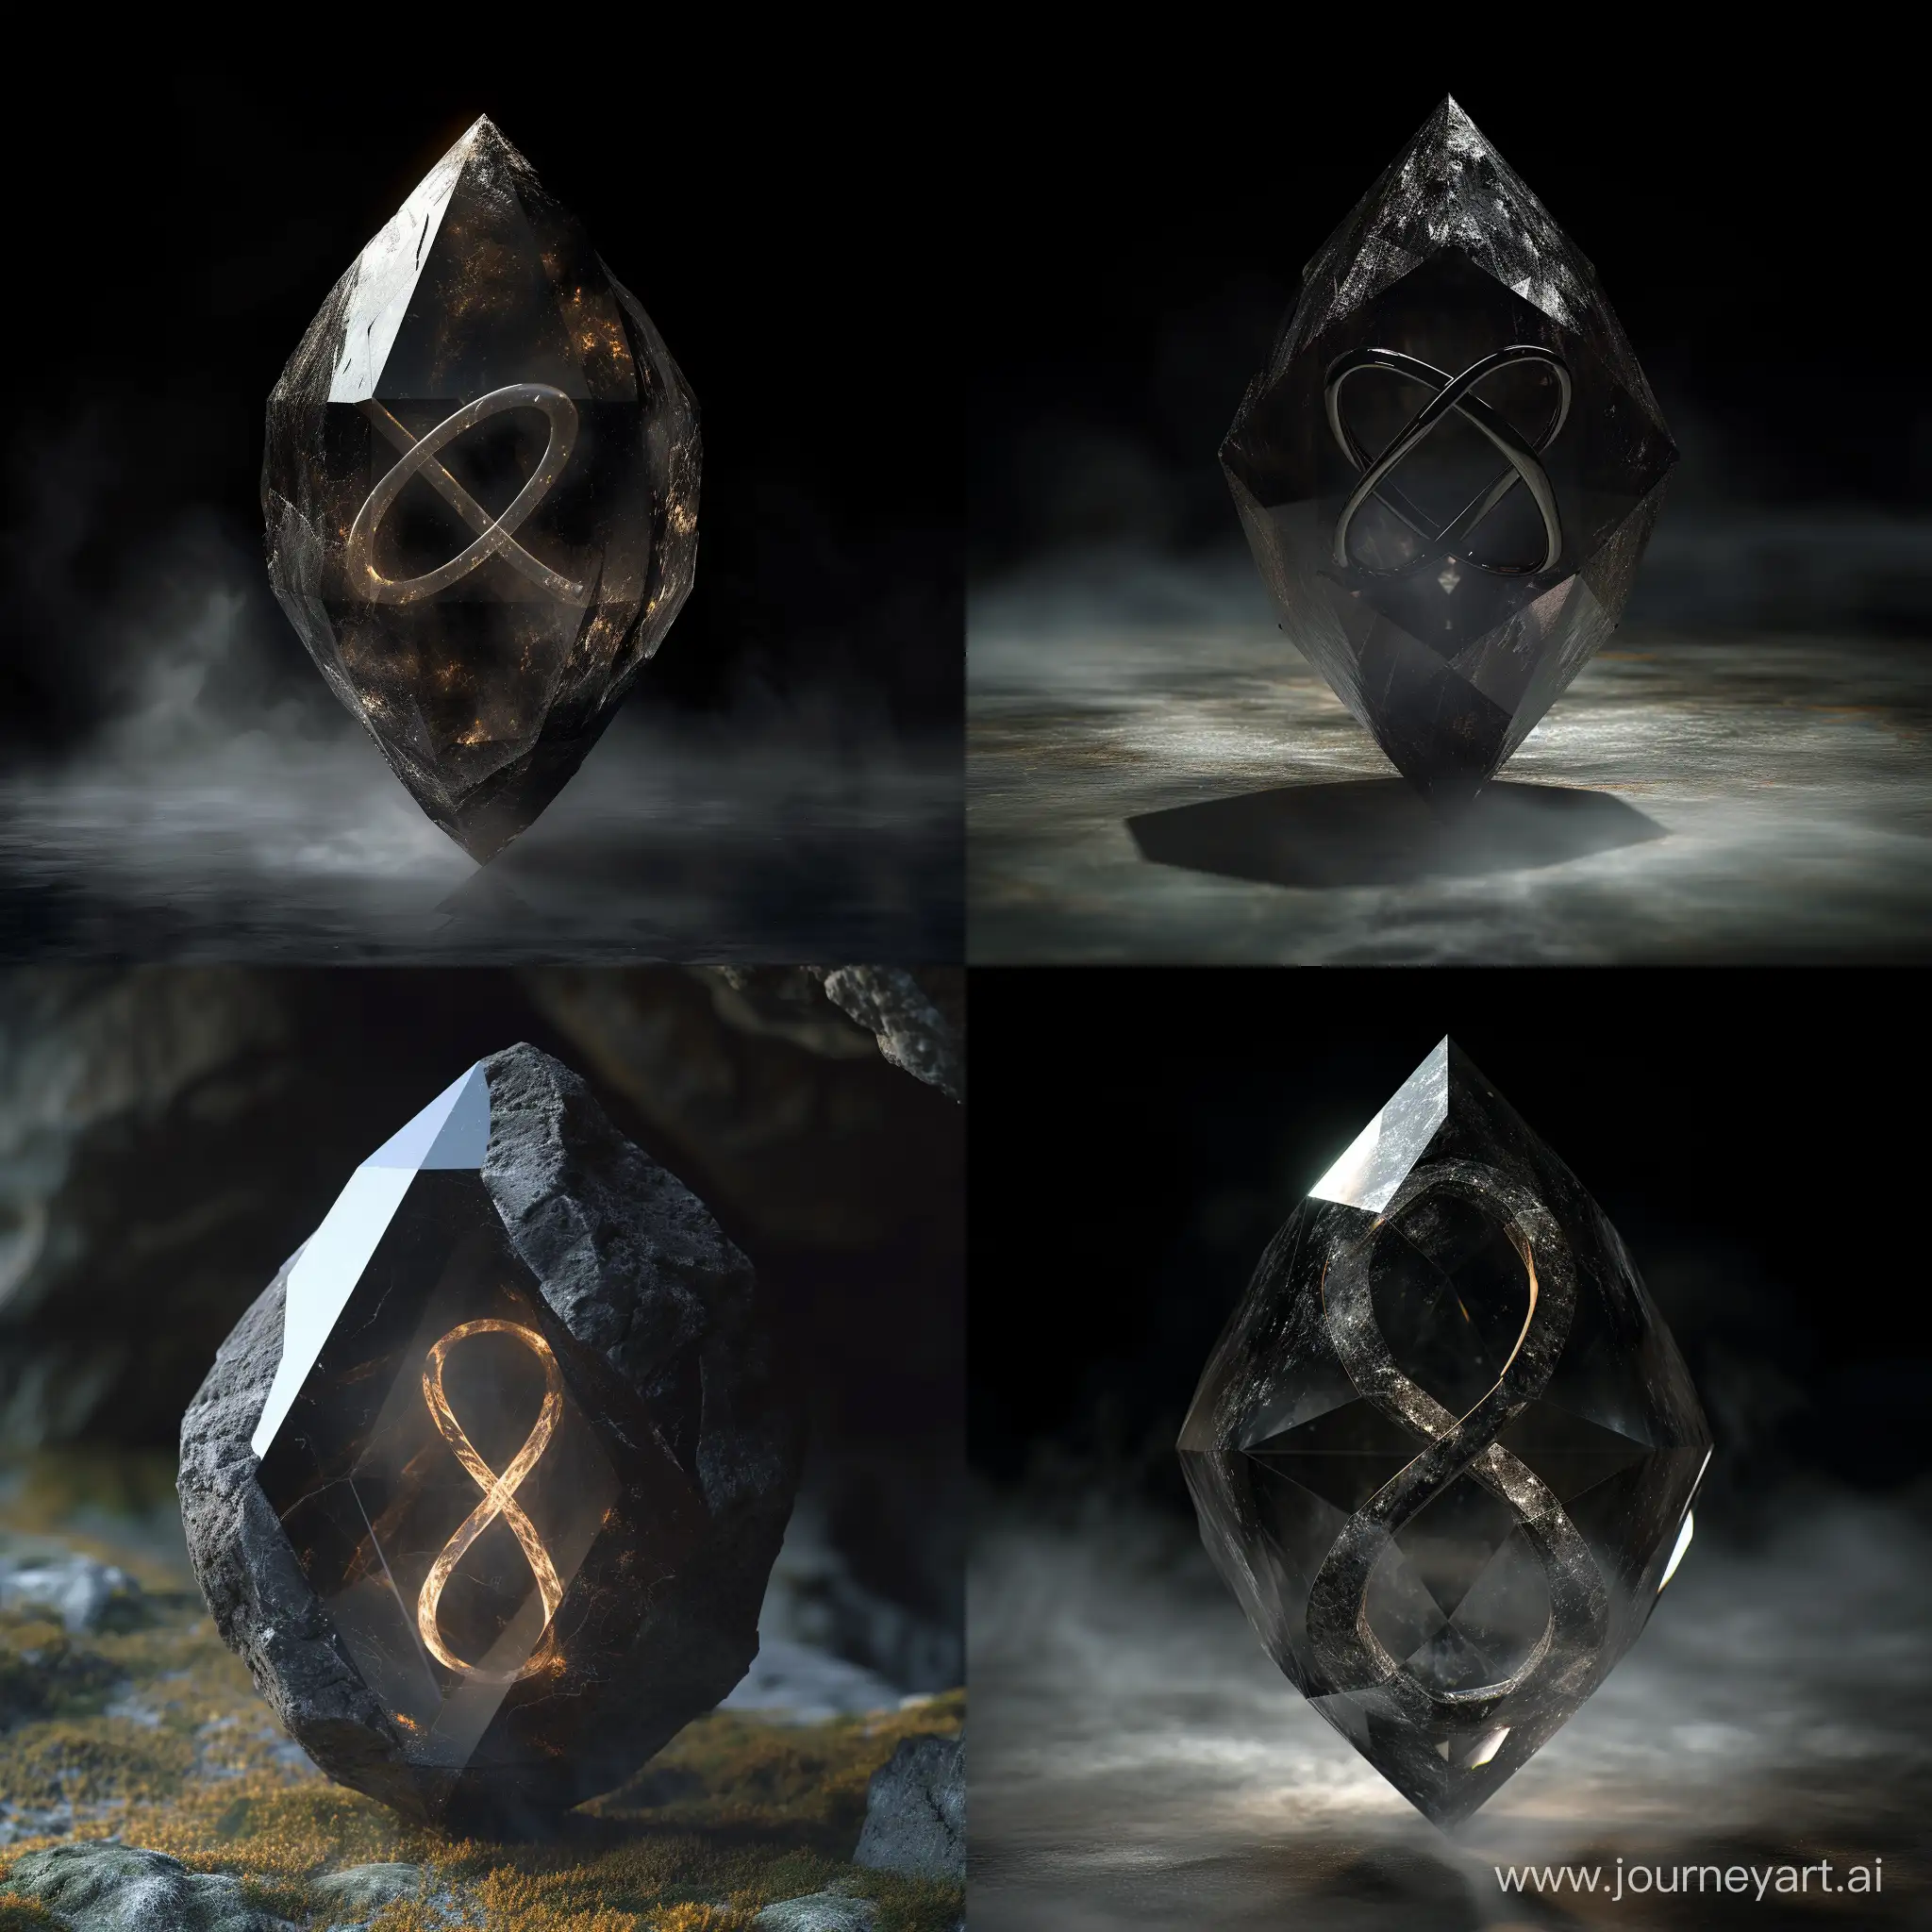 Translucent-Black-Diamond-Essence-in-LOTRInspired-Cave-Realistic-Fantasy-4K-HD-Image